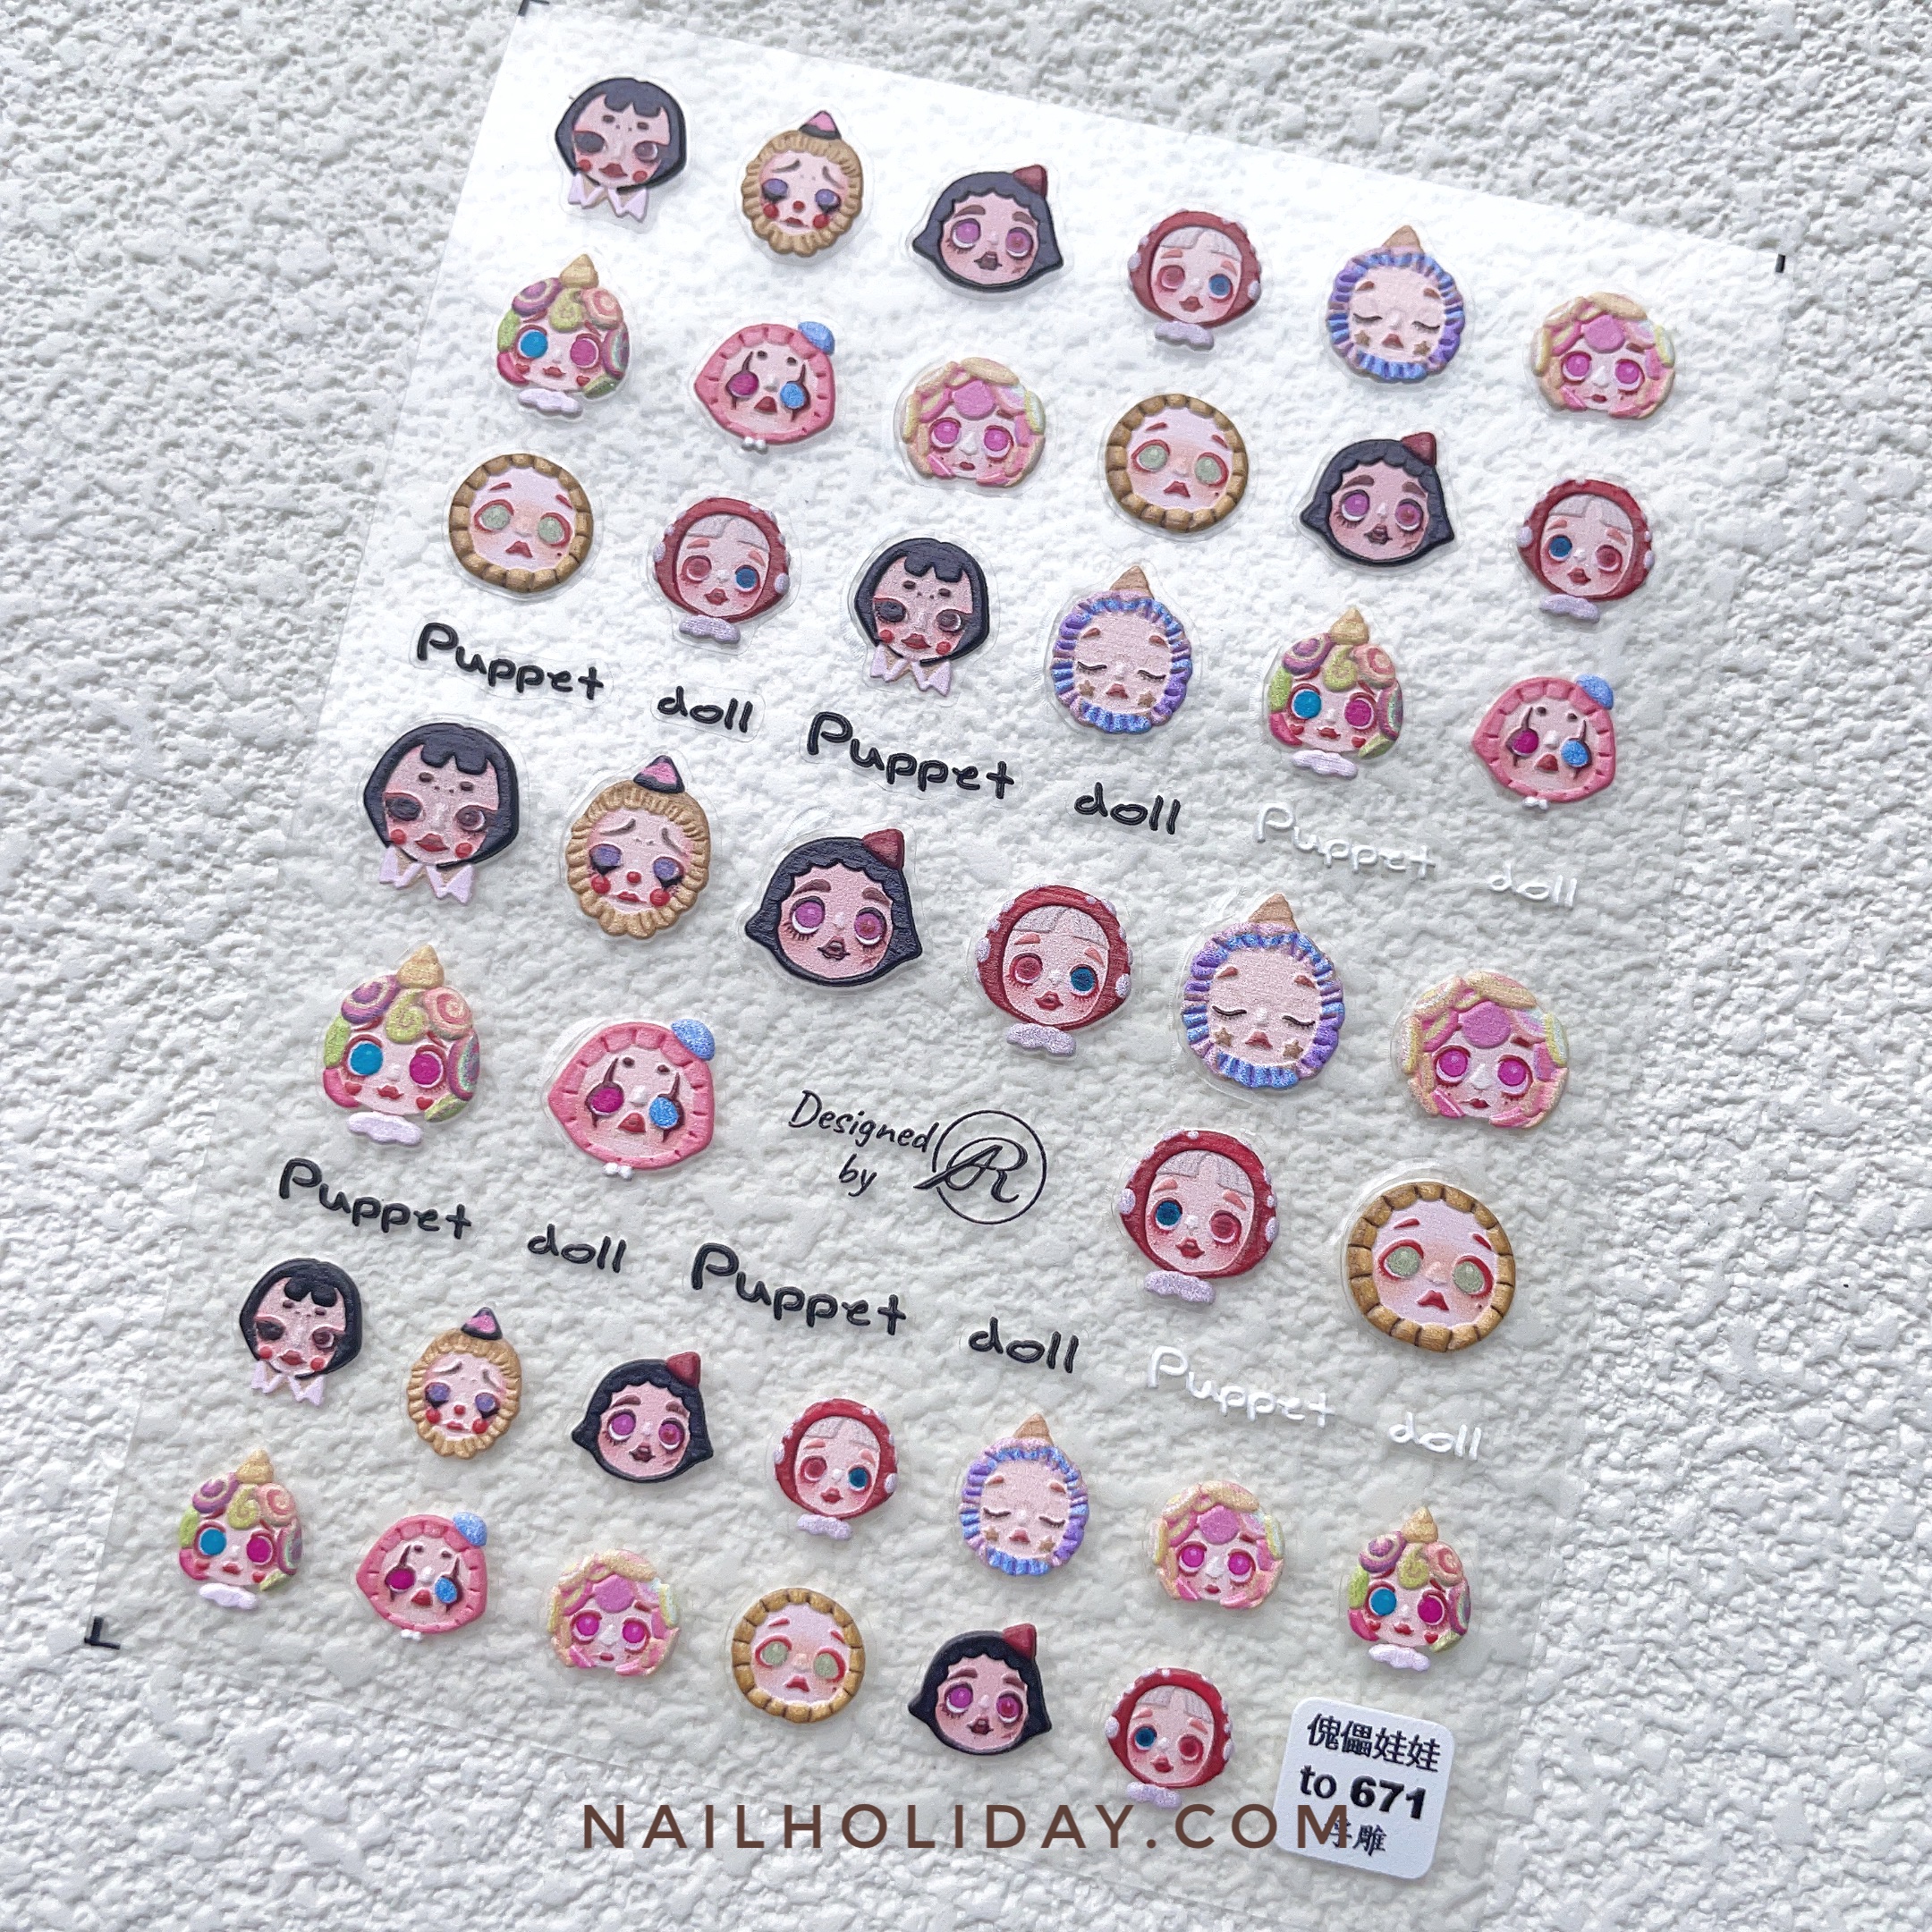 Mickey Nail Sticker（11 Sheets）